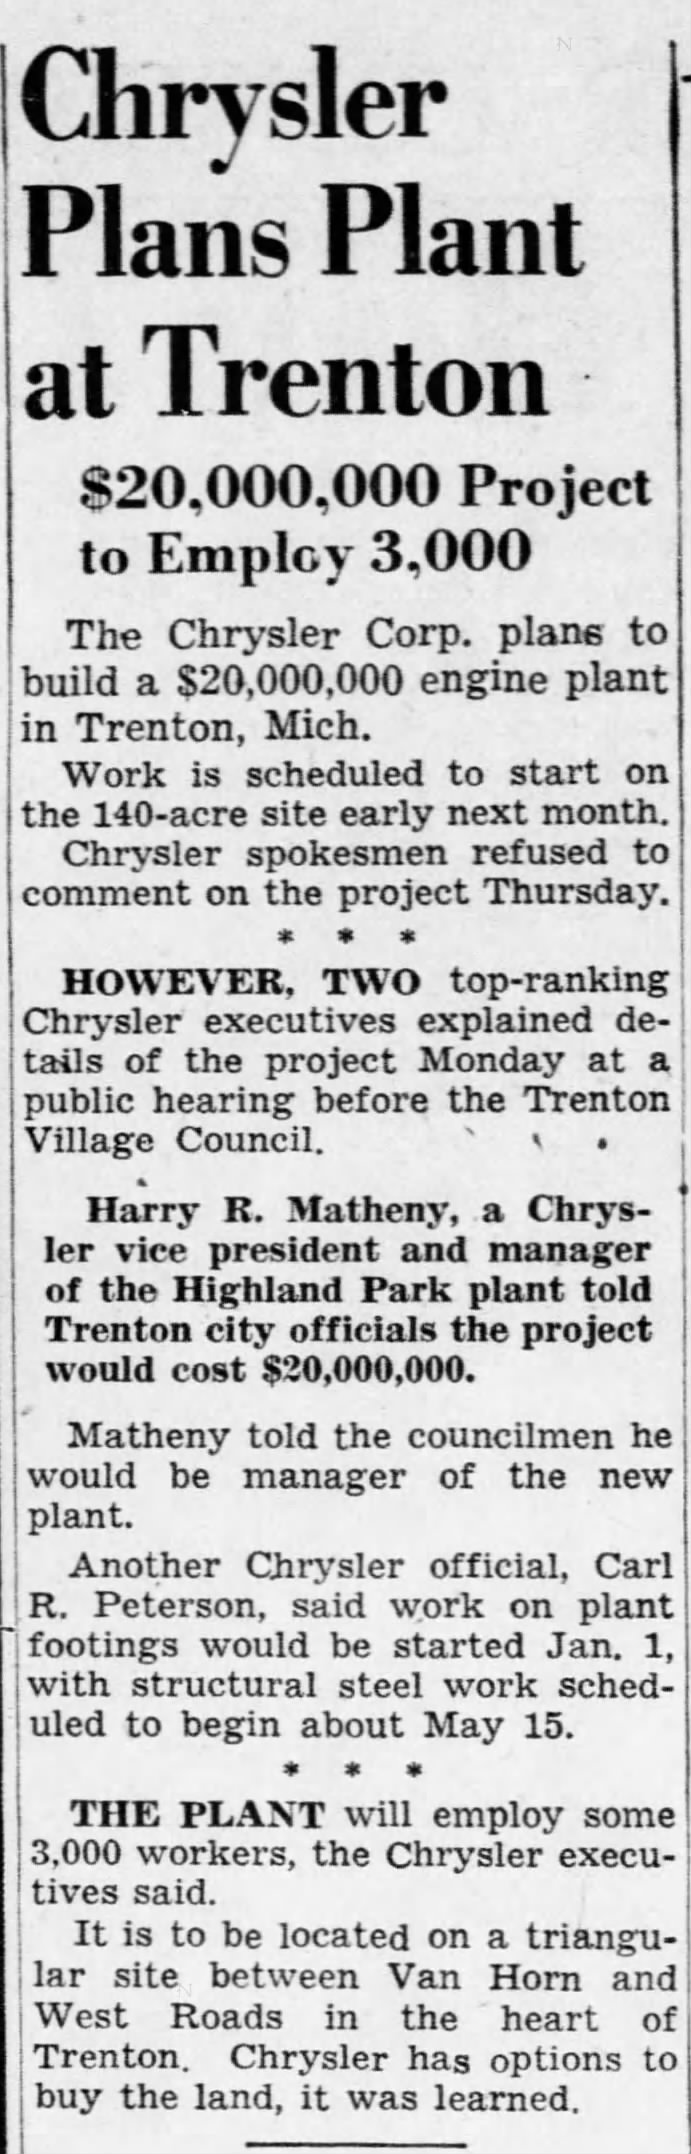 Chrysler Plans Plant at Trenton